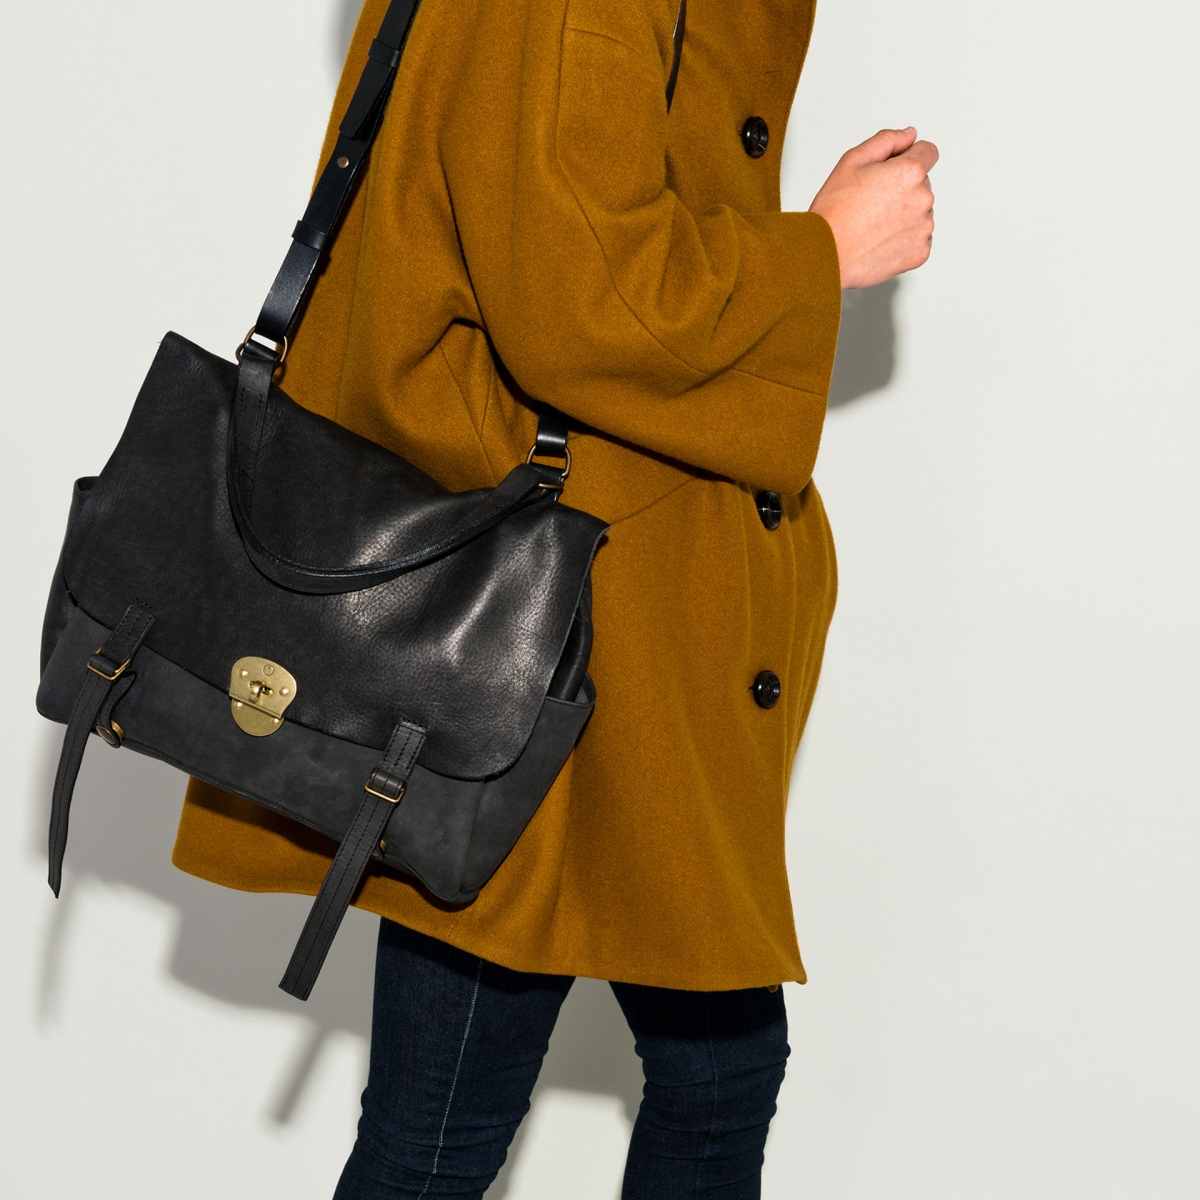 COLINE leather handbag | Bleu de Chauffe — Calame Palma